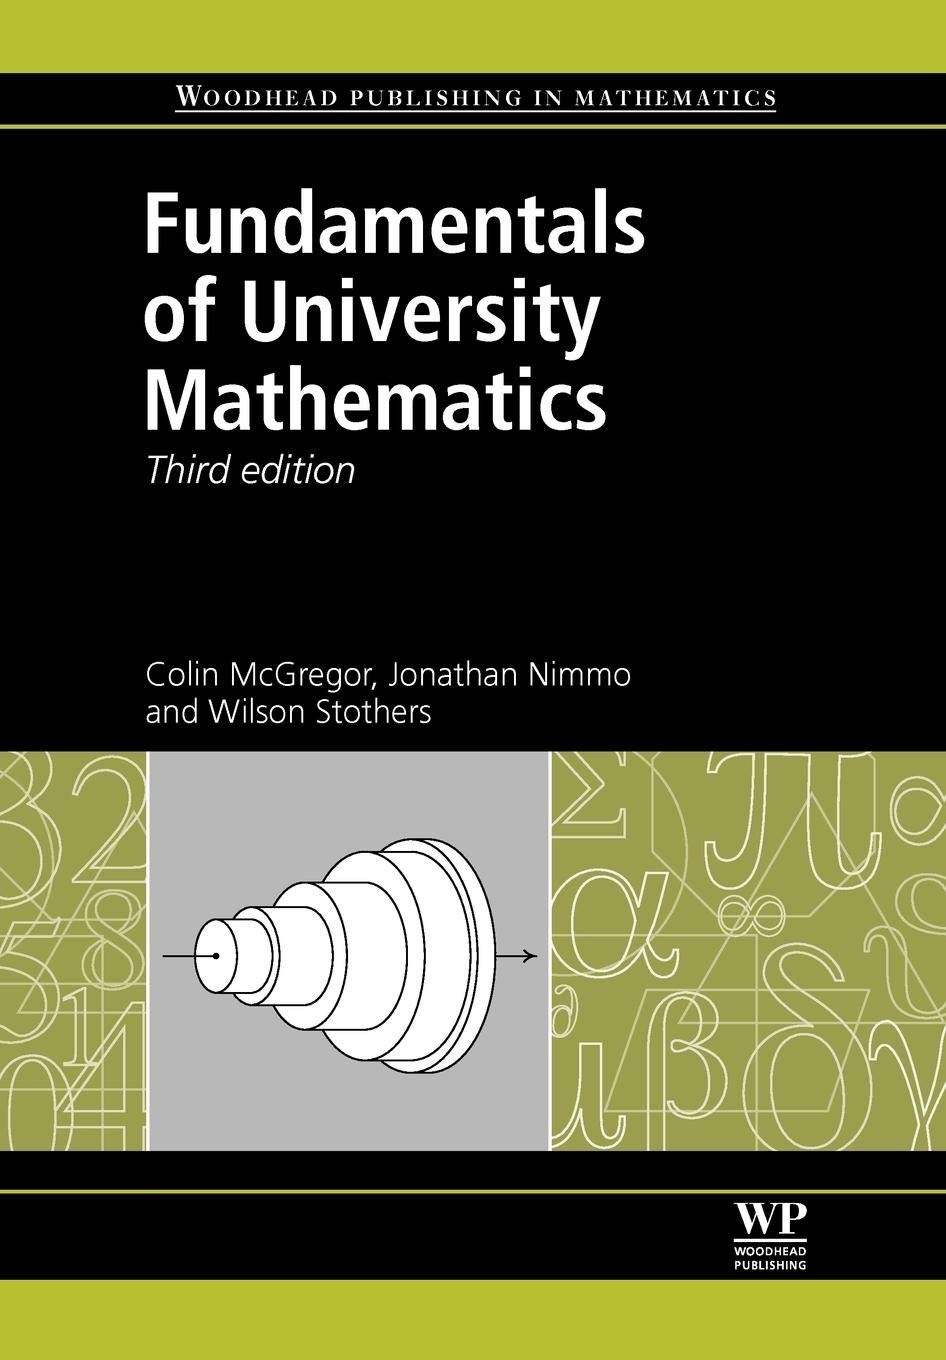 Fundamentals of University Mathematics